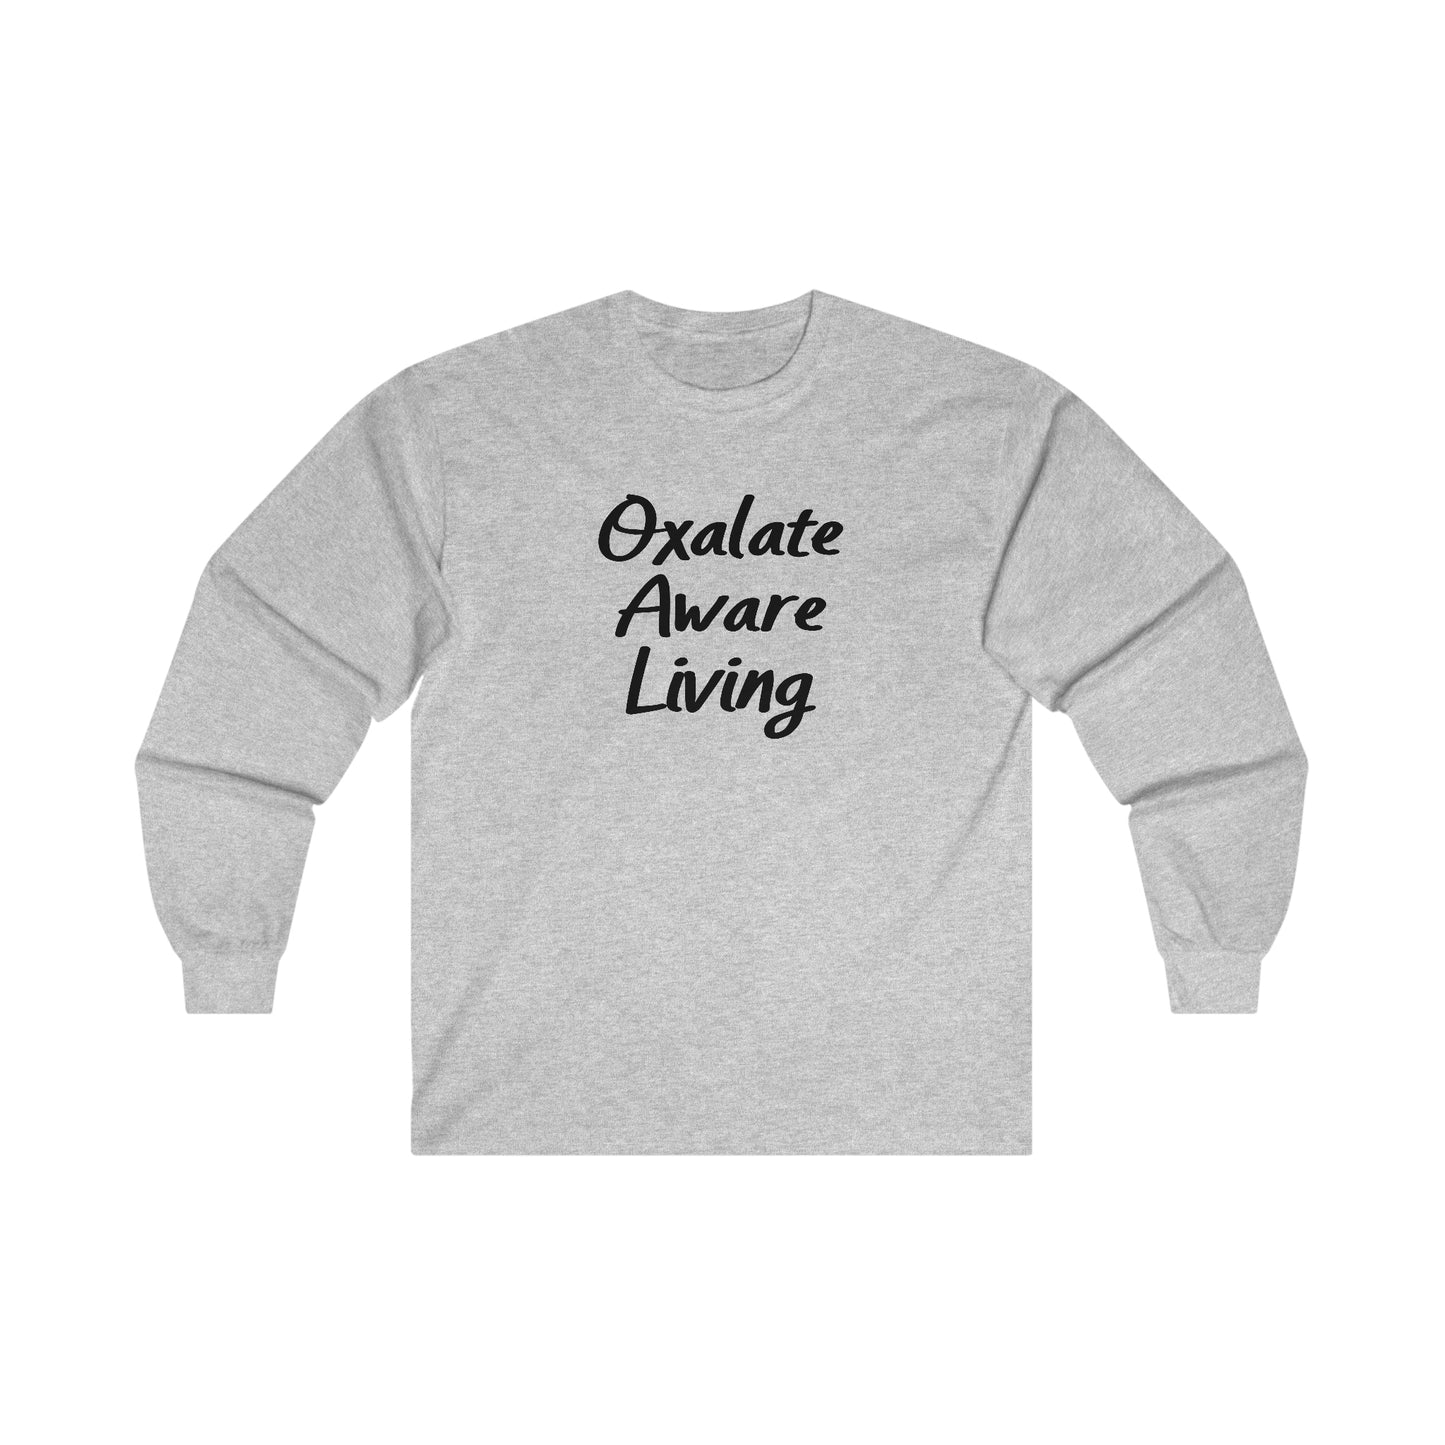 Oxalate Aware Living Kidney Stone Long Sleeve Tshirt